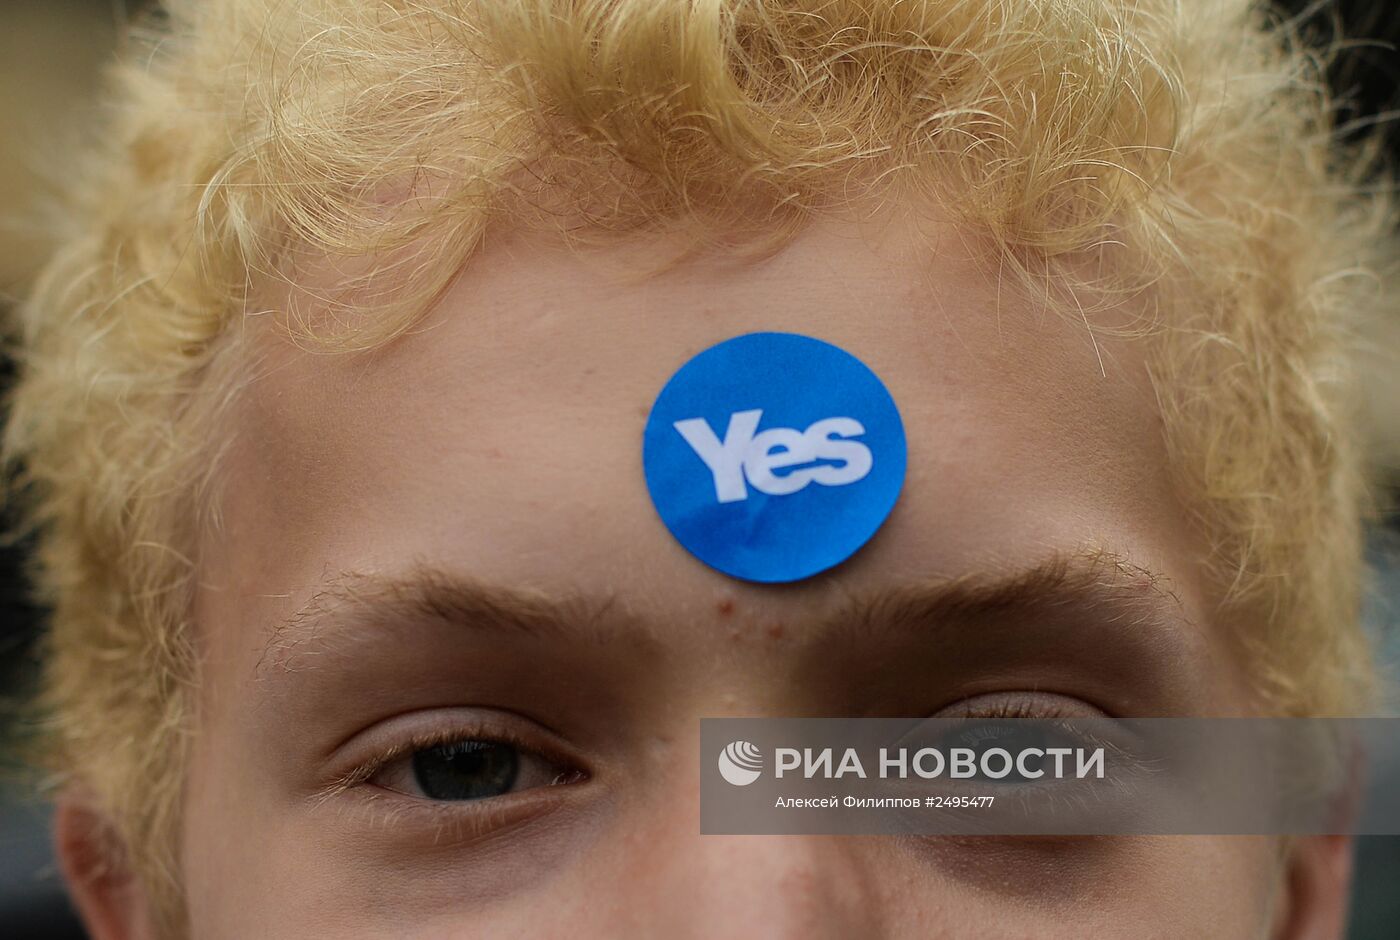 Референдум о независимости Шотландии